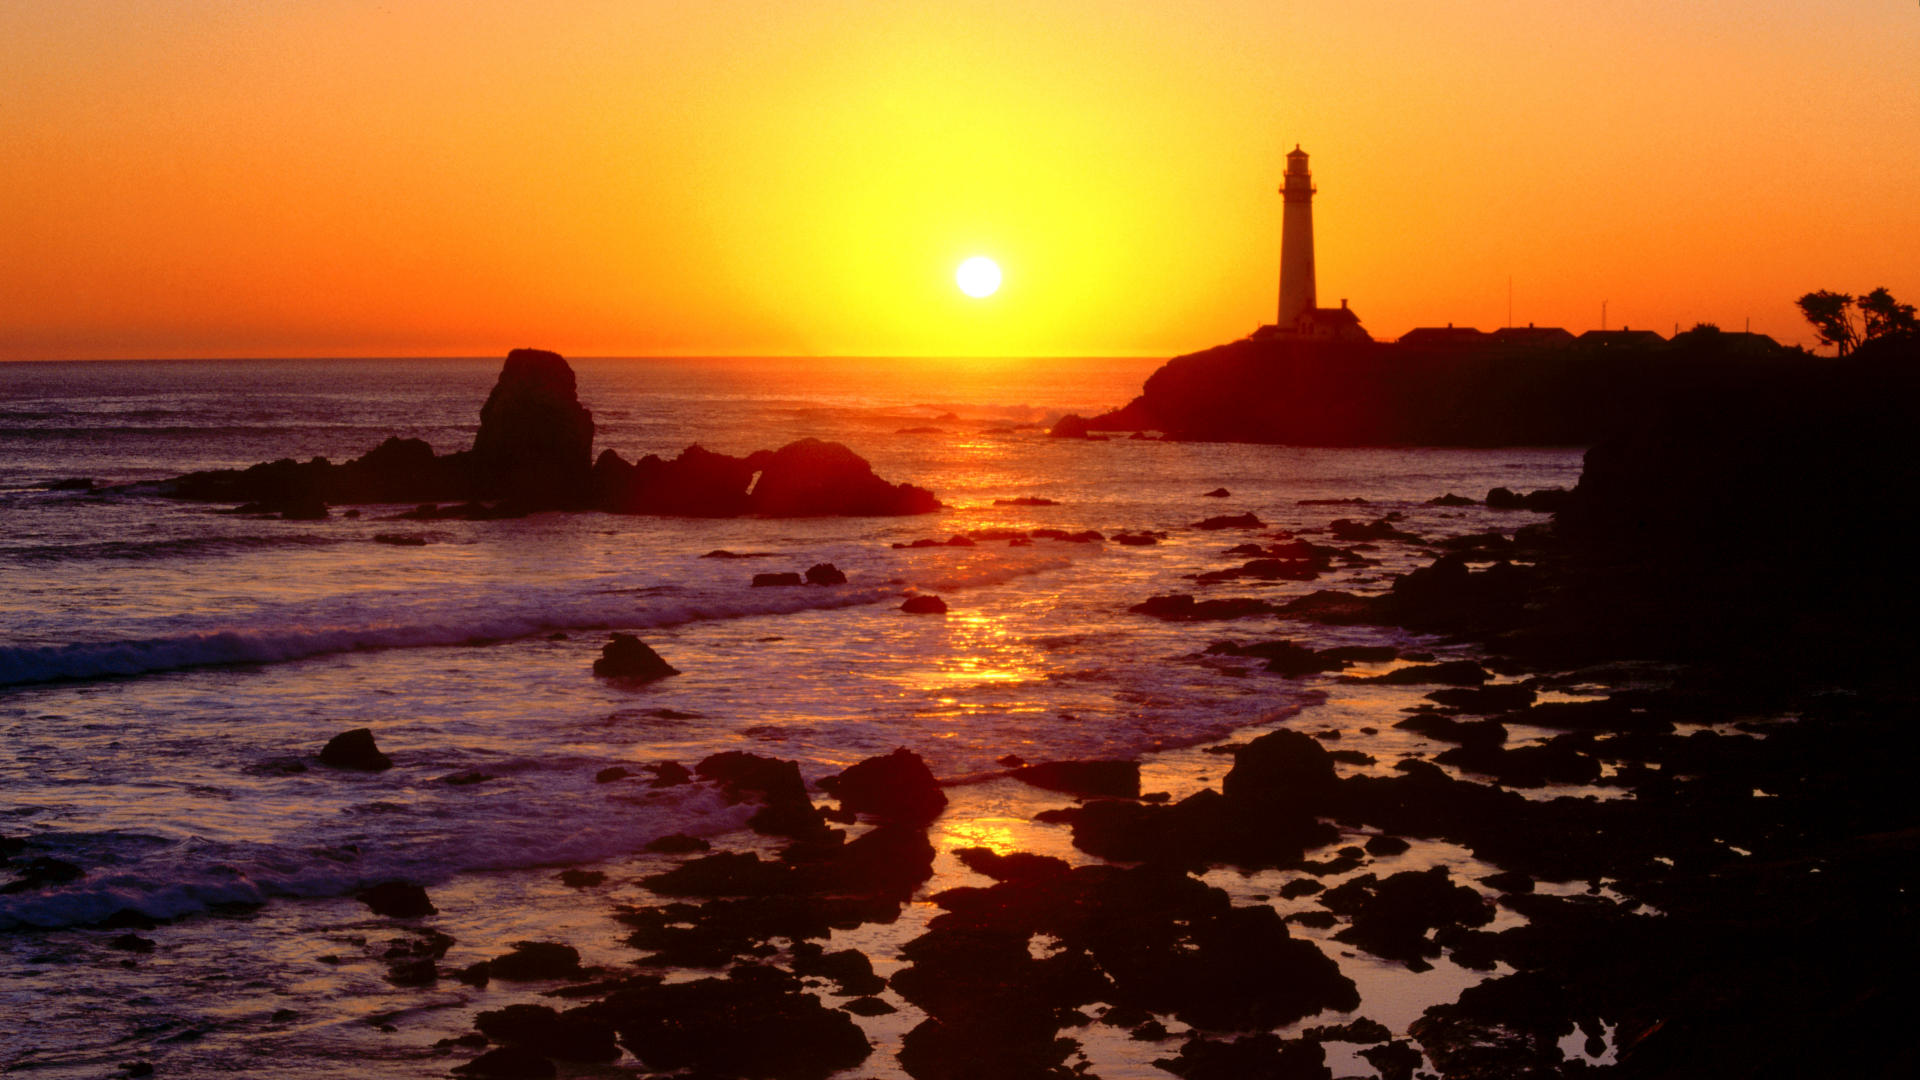  California Mateo Pigeon Golden Sunset Lighthouse Point wallpapers HD